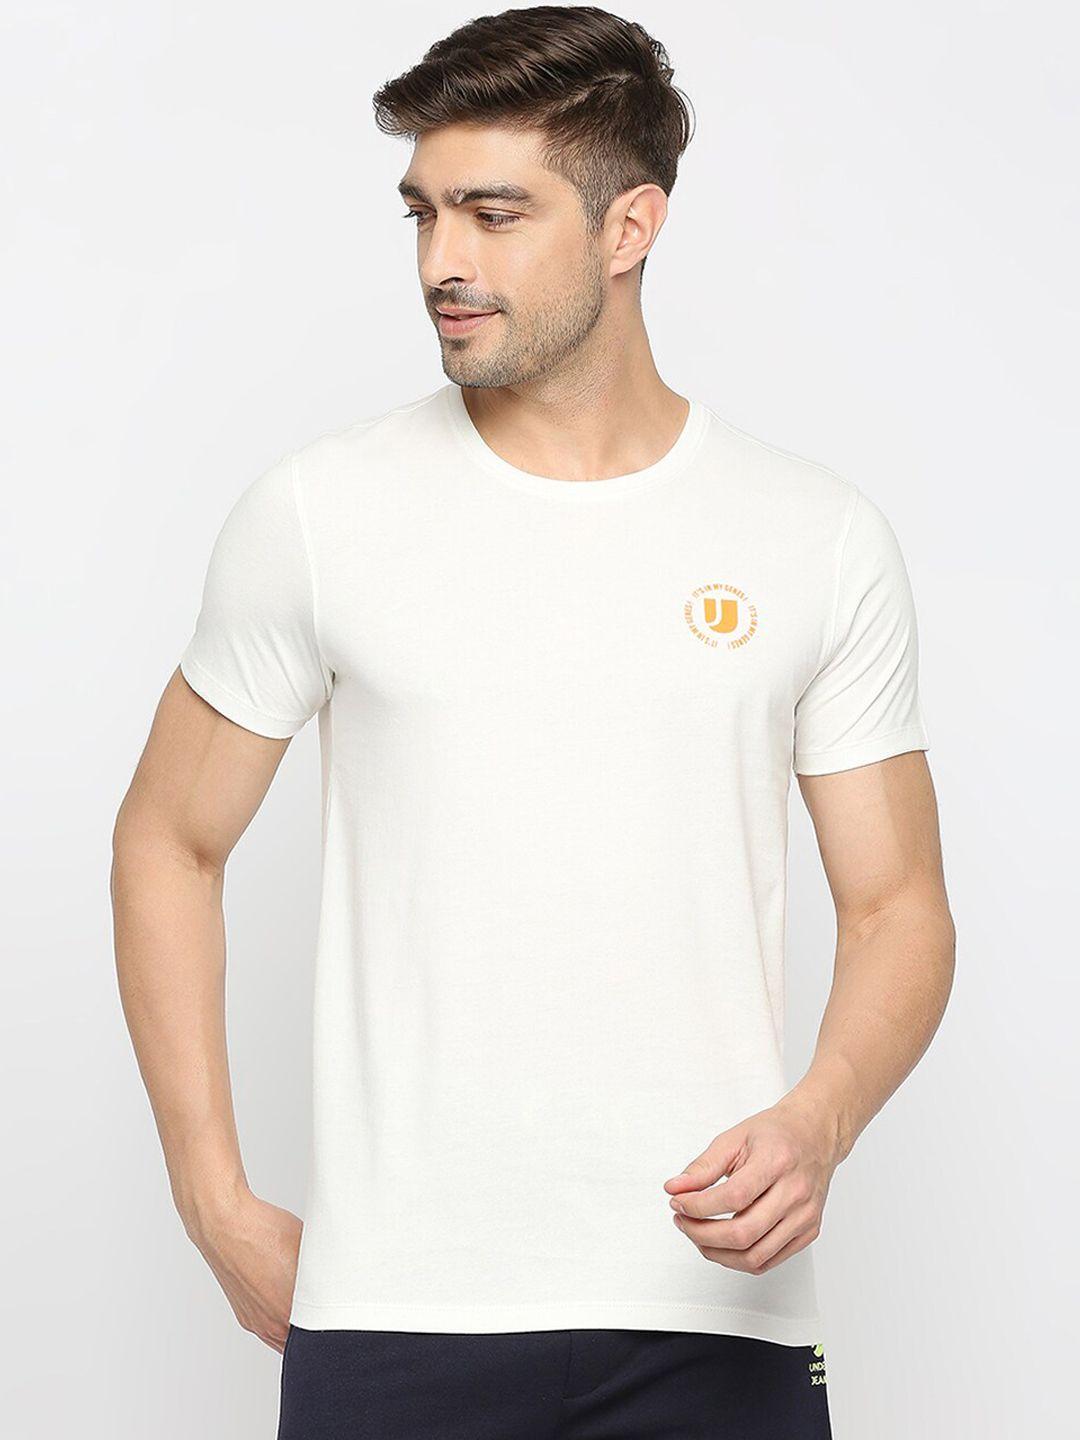 underjeans-by-spykar-men-round-neck-cotton-t-shirt